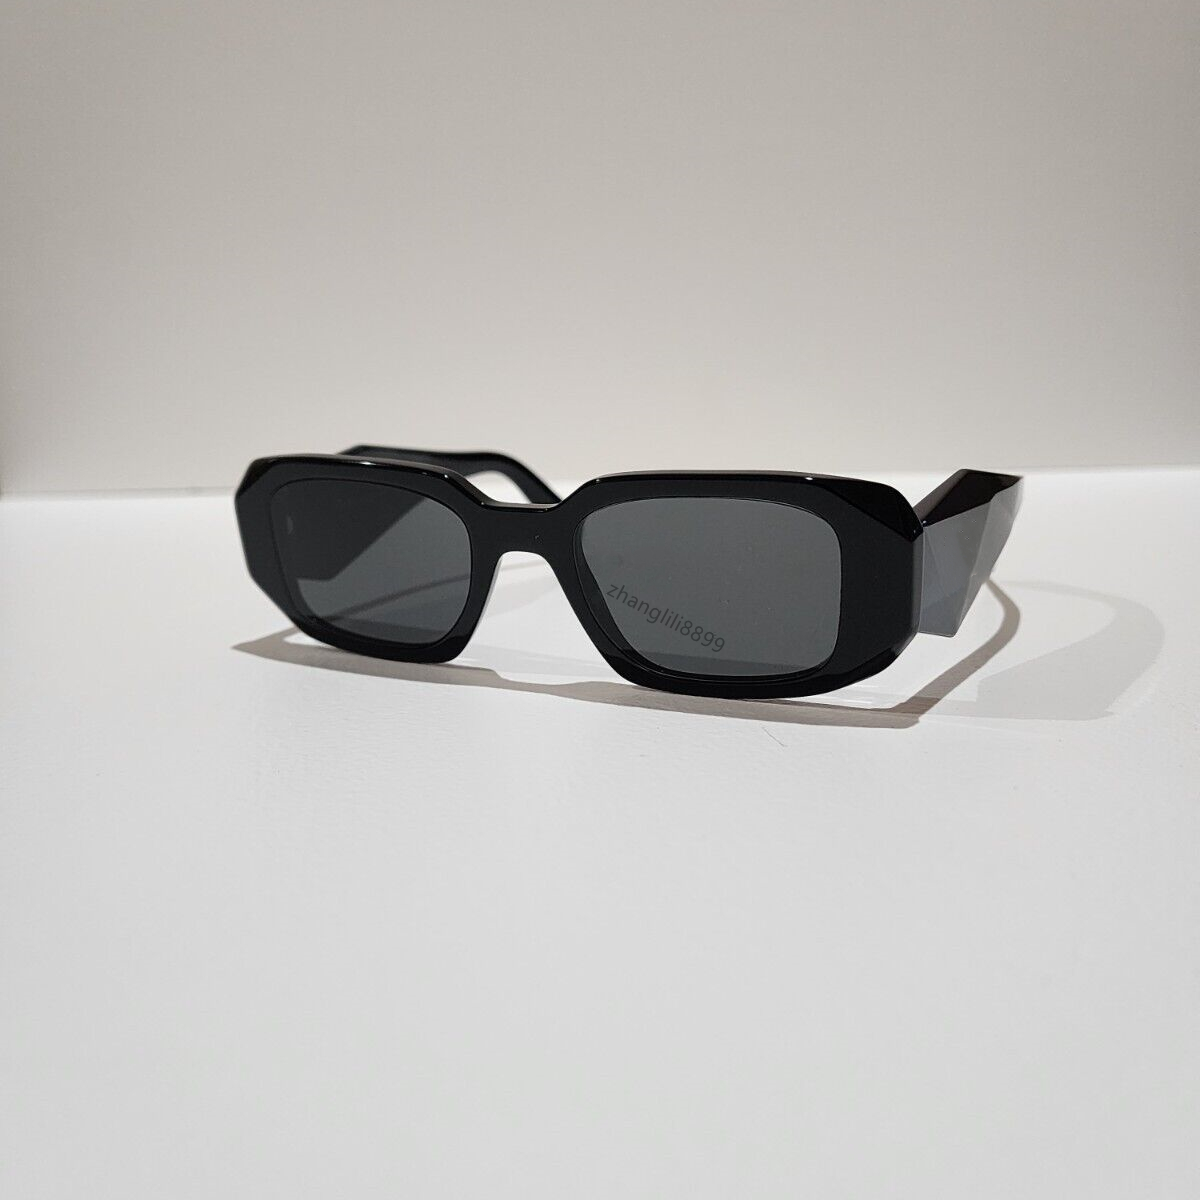 Brand Pra17 Luxury Designer Sunglasses PR17WS 49mm Black / Dark Grey Lens Women Sunglasses Runway Retro Stylish Square Female Ladies Glasses UV400